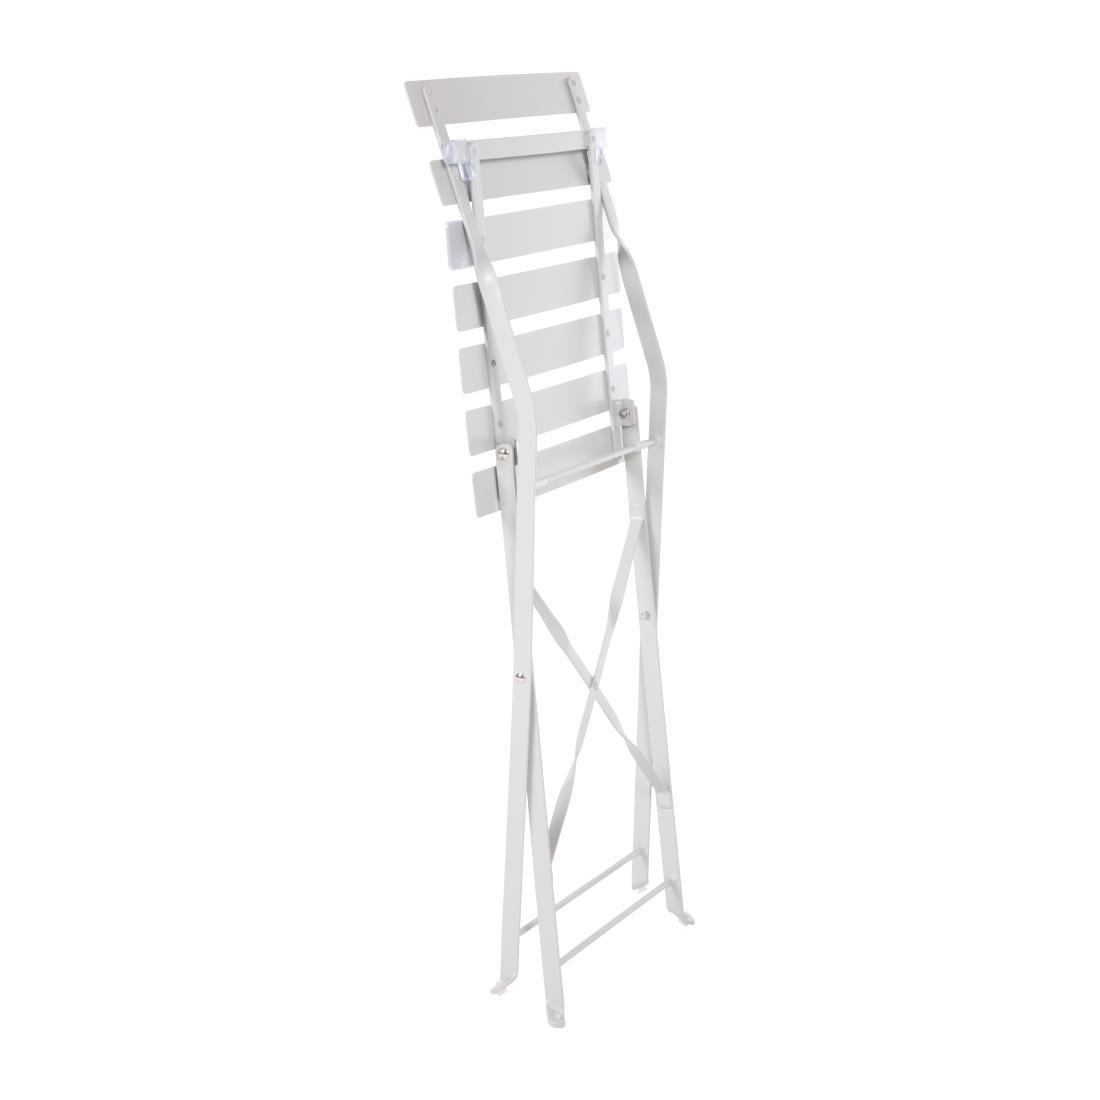 Bolero Steel Pavement StyleFolding Chairs Grey (Pack of 2) - GH551  - 6